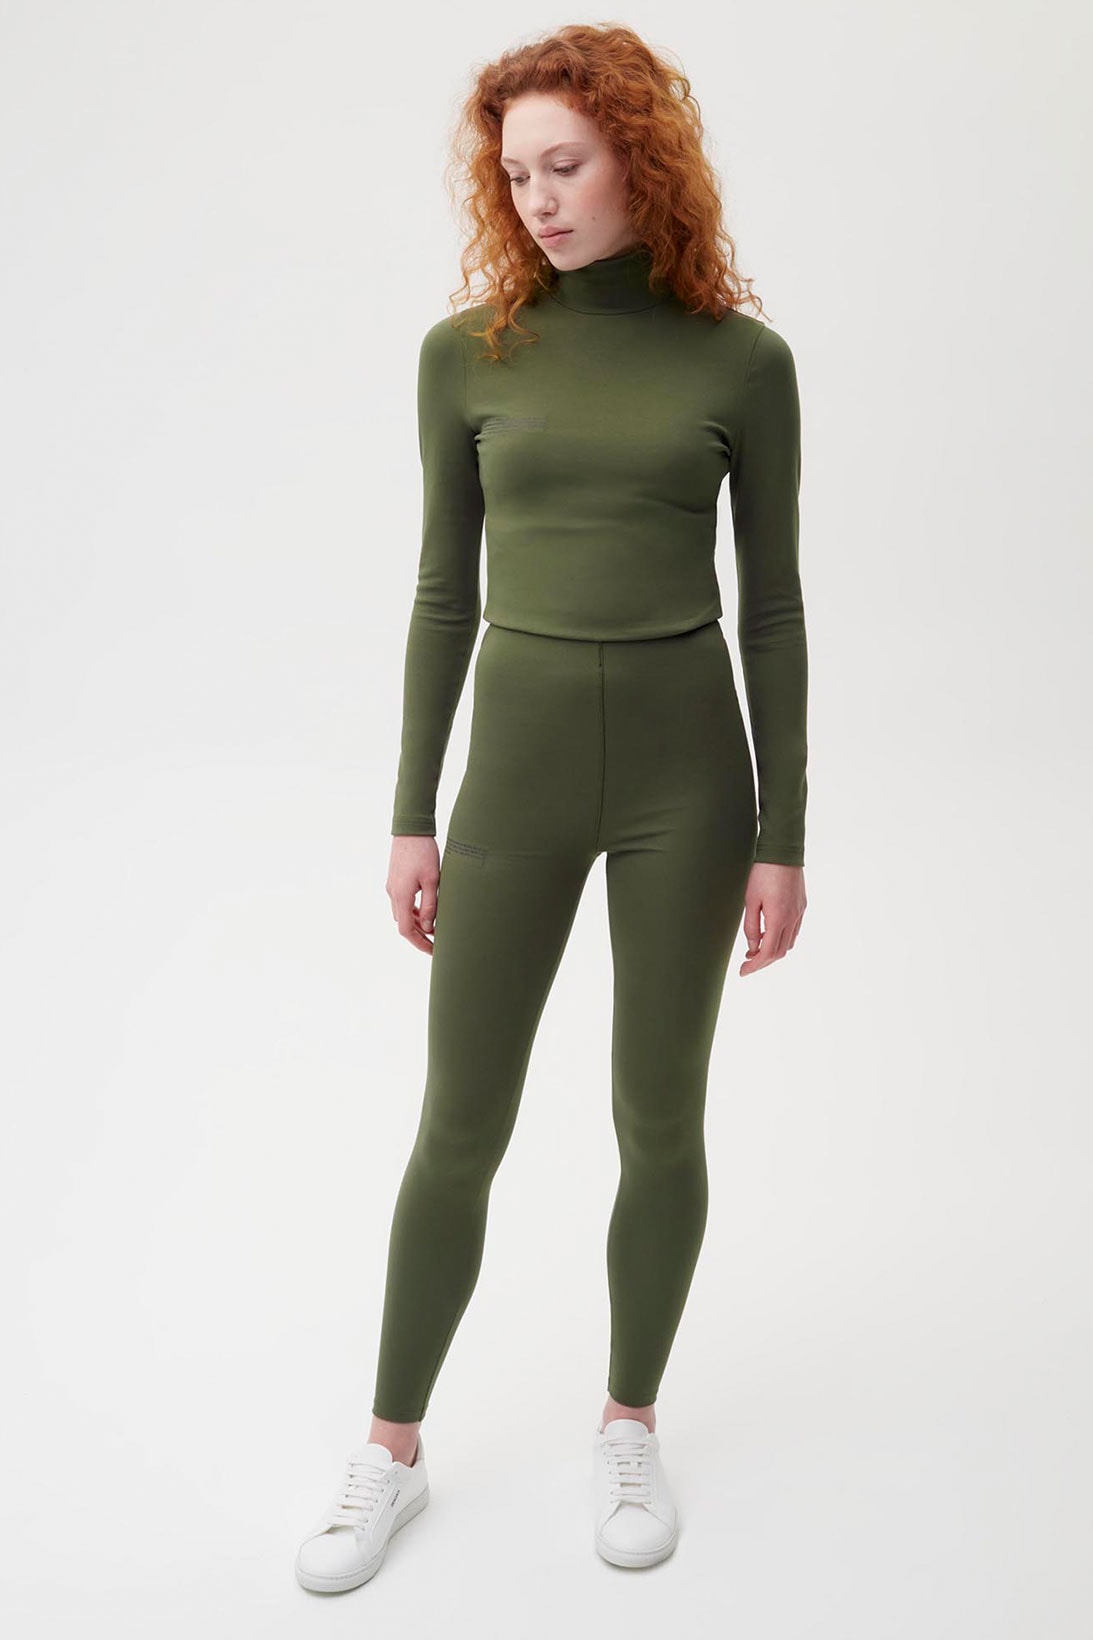 pangaia roica stretch athleisure sustainable collection turtleneck top leggings khaki